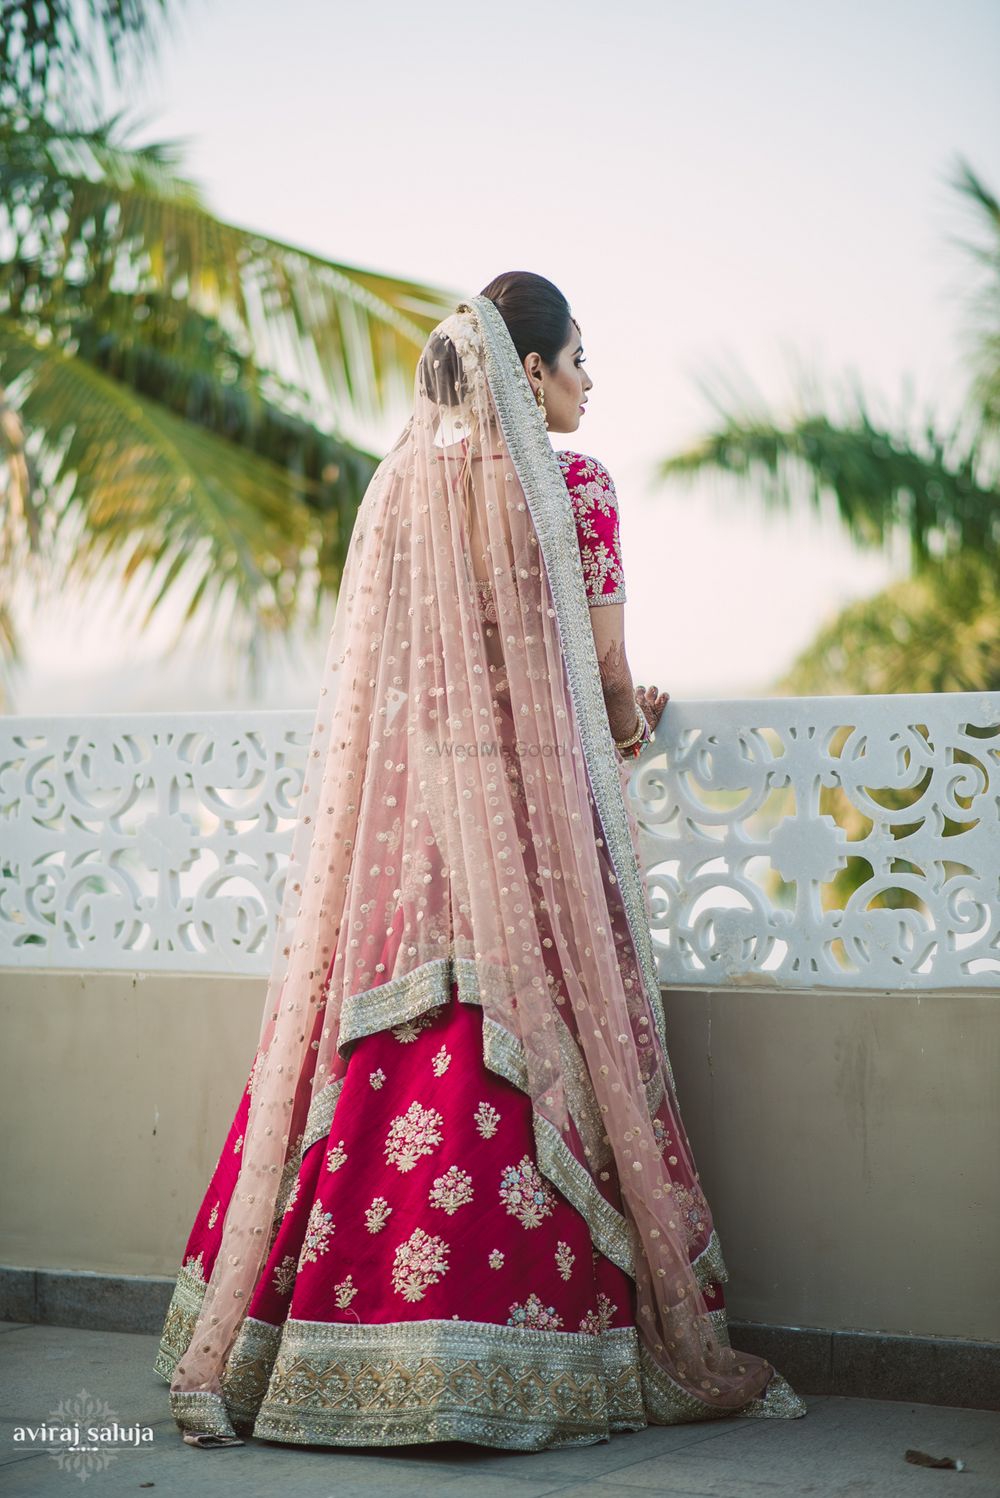 Photo of Bride back shot with light pink dupatta